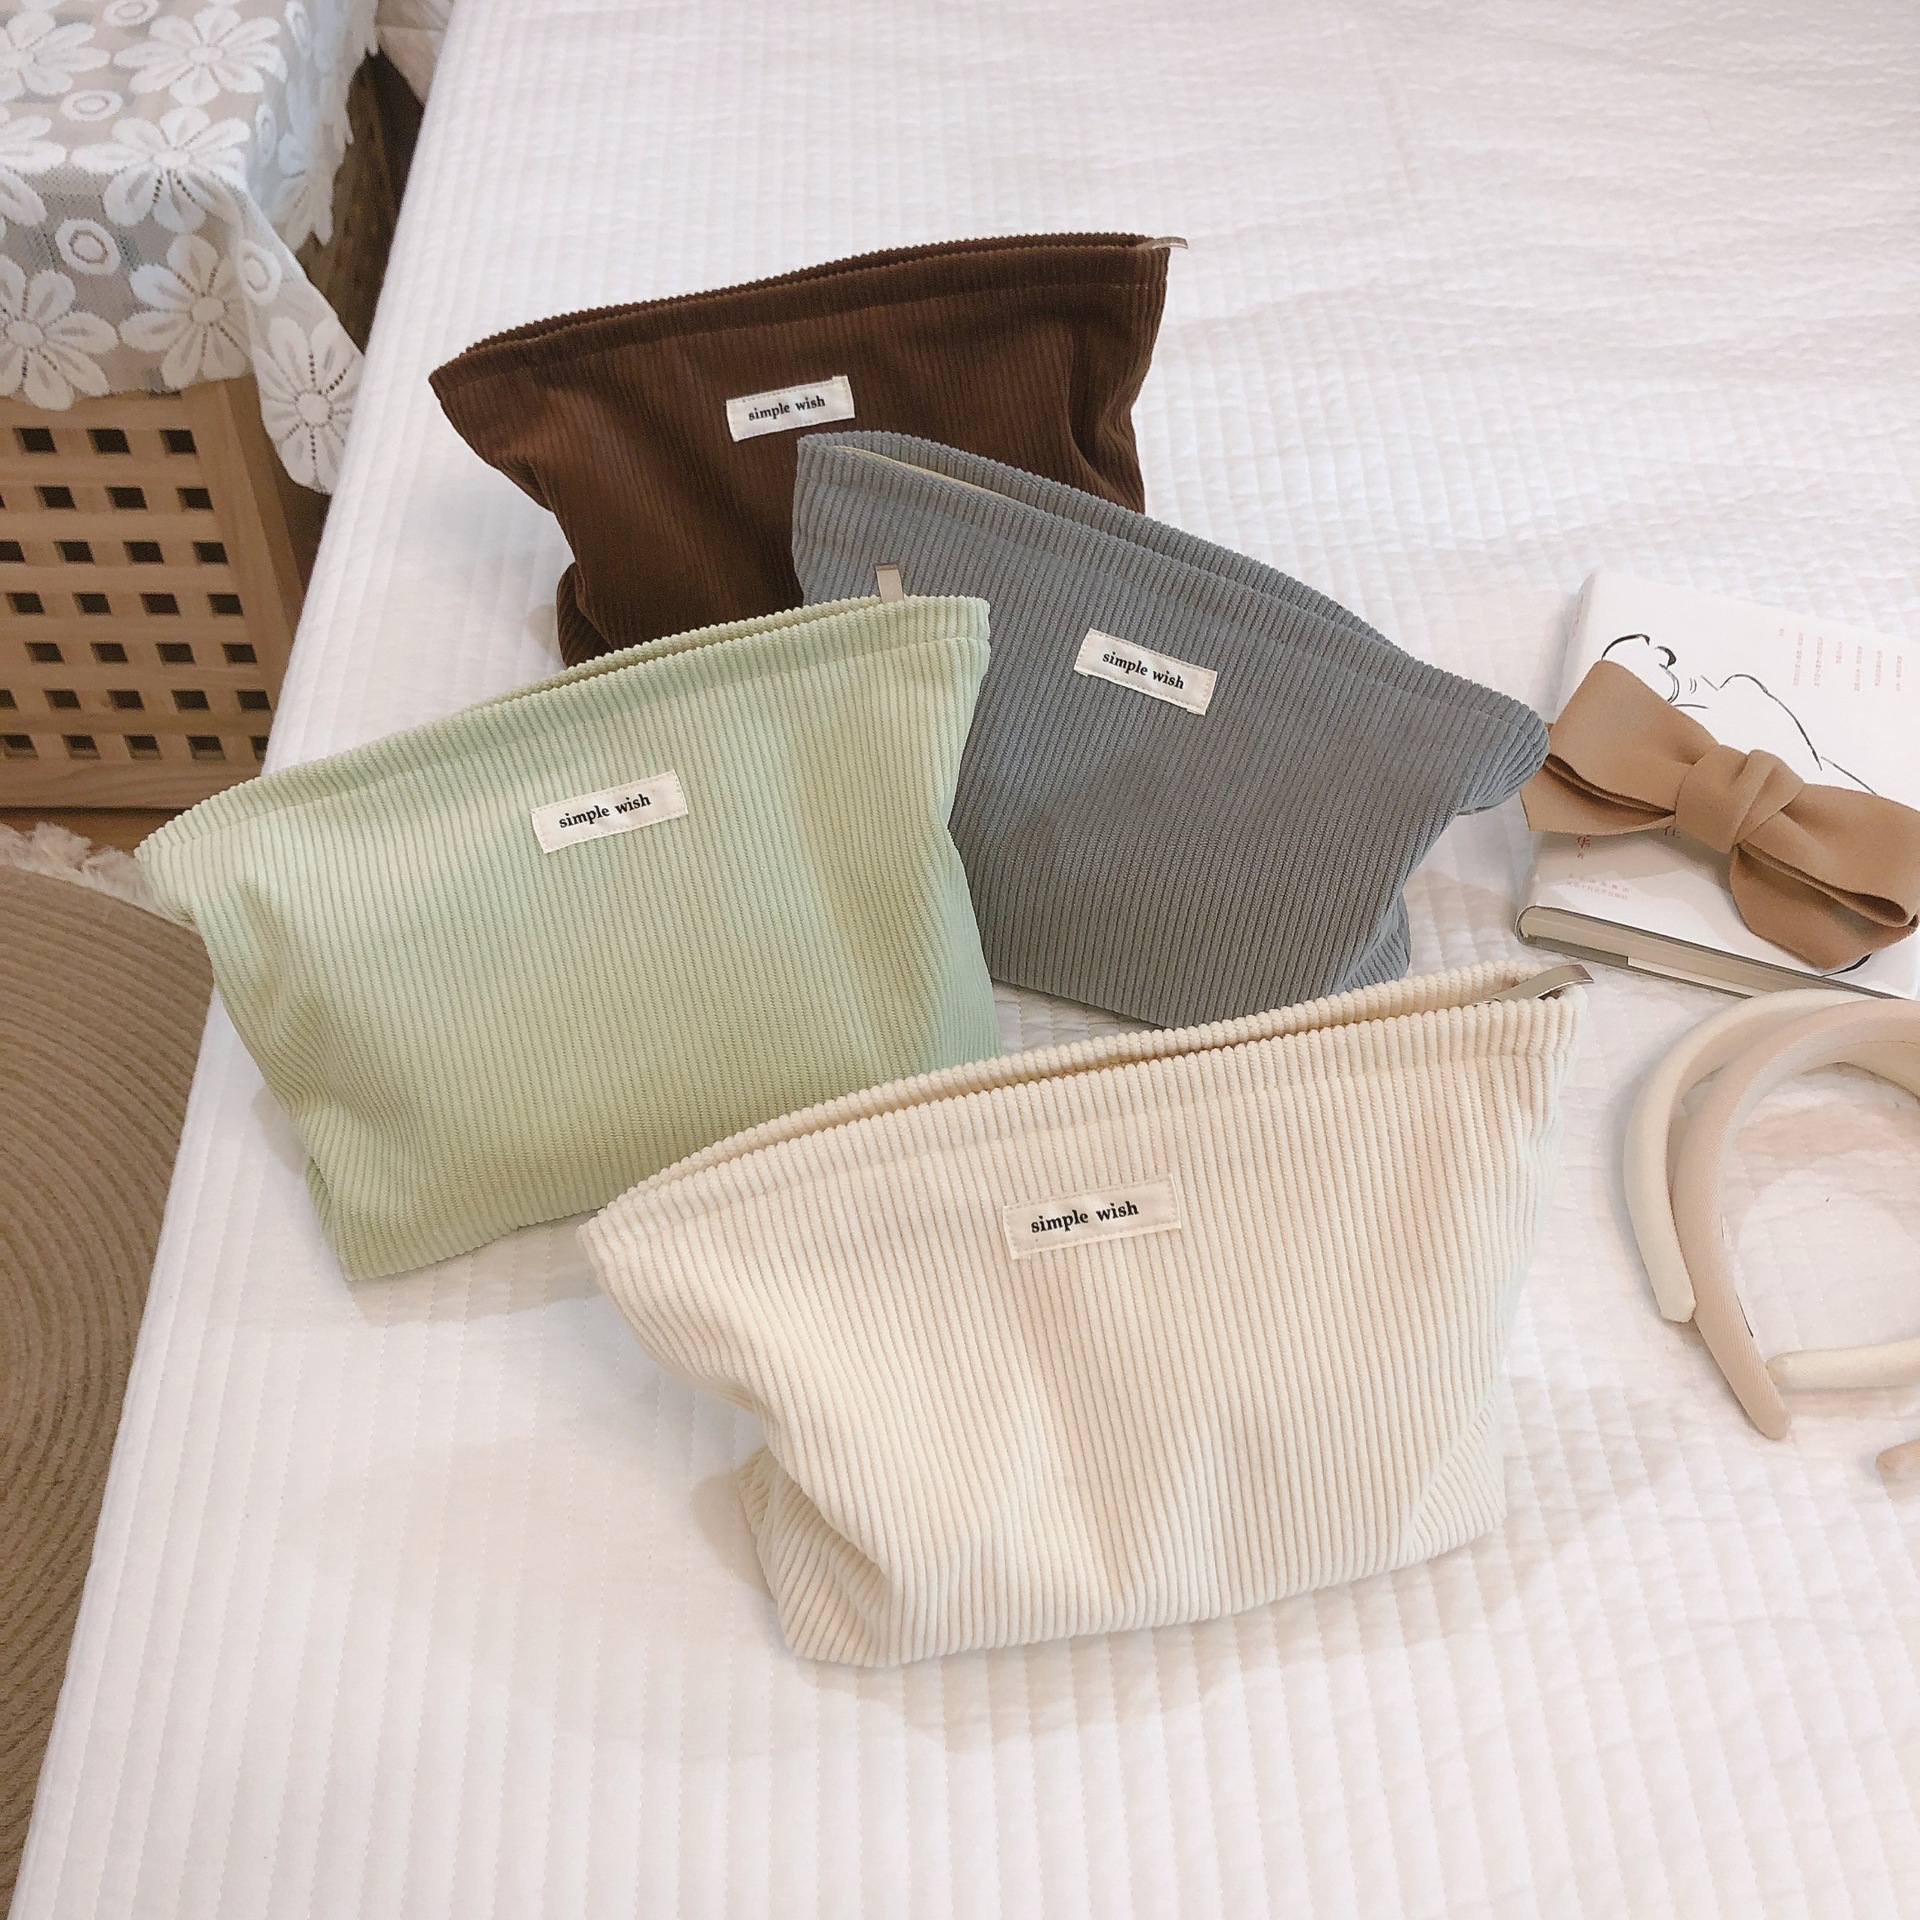 Square cosmetic bag solid corduroy cloth bag hand bag fabric art cosmetic storage bag sail cloth bag simple art